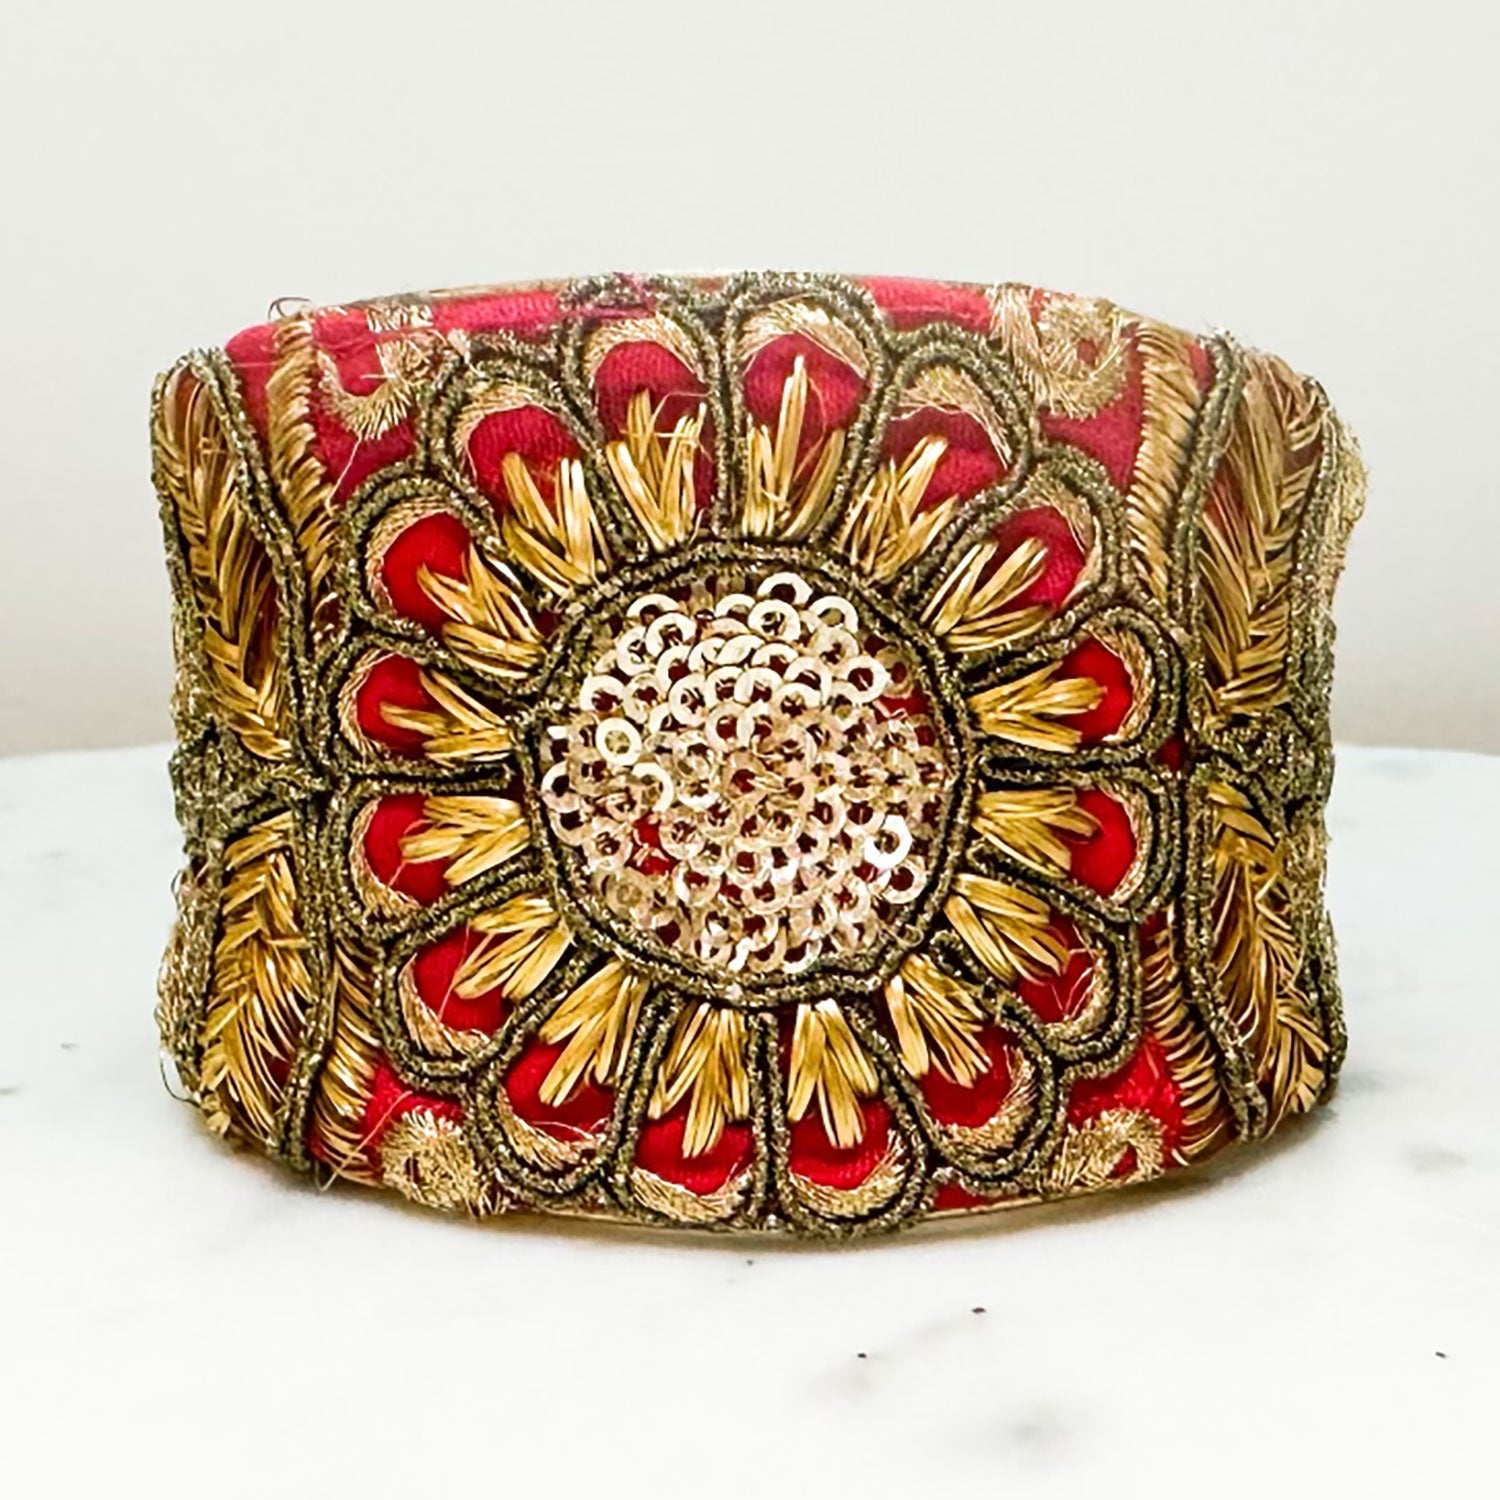 Yuri - Red & Gold Sequined Cuff Bracelet